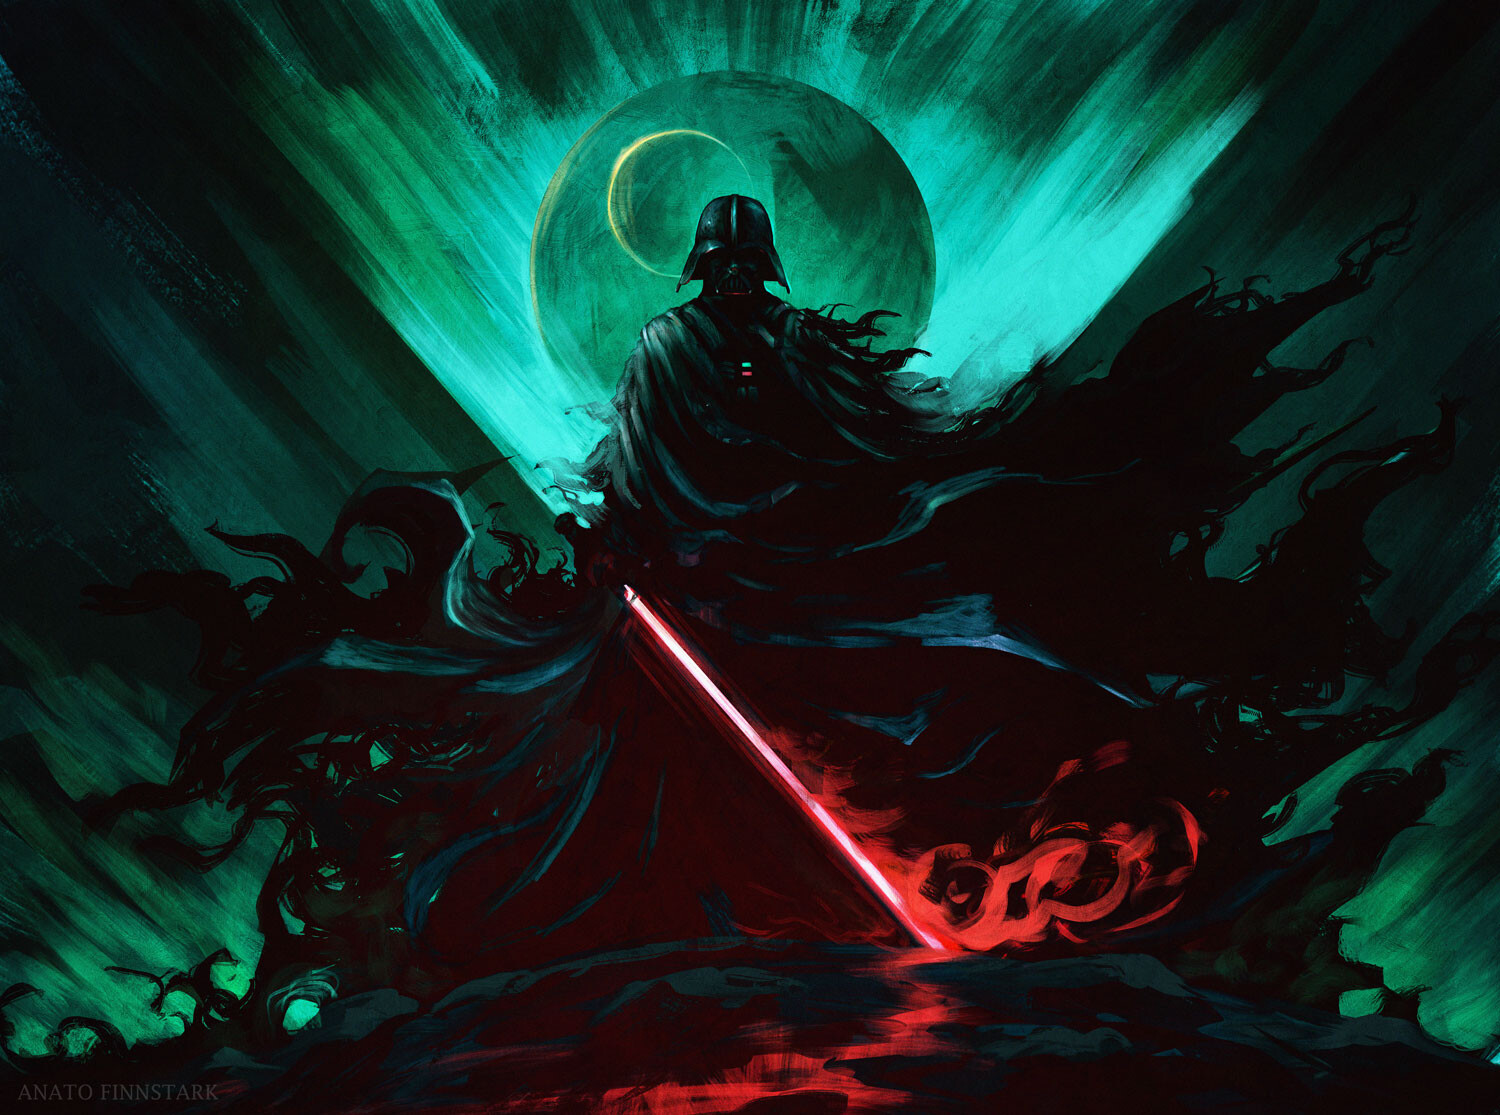 Star Wars Science Fiction Artwork Darth Vader Star Wars Villains Sith Anato Finnstark Watermarked 1500x1115